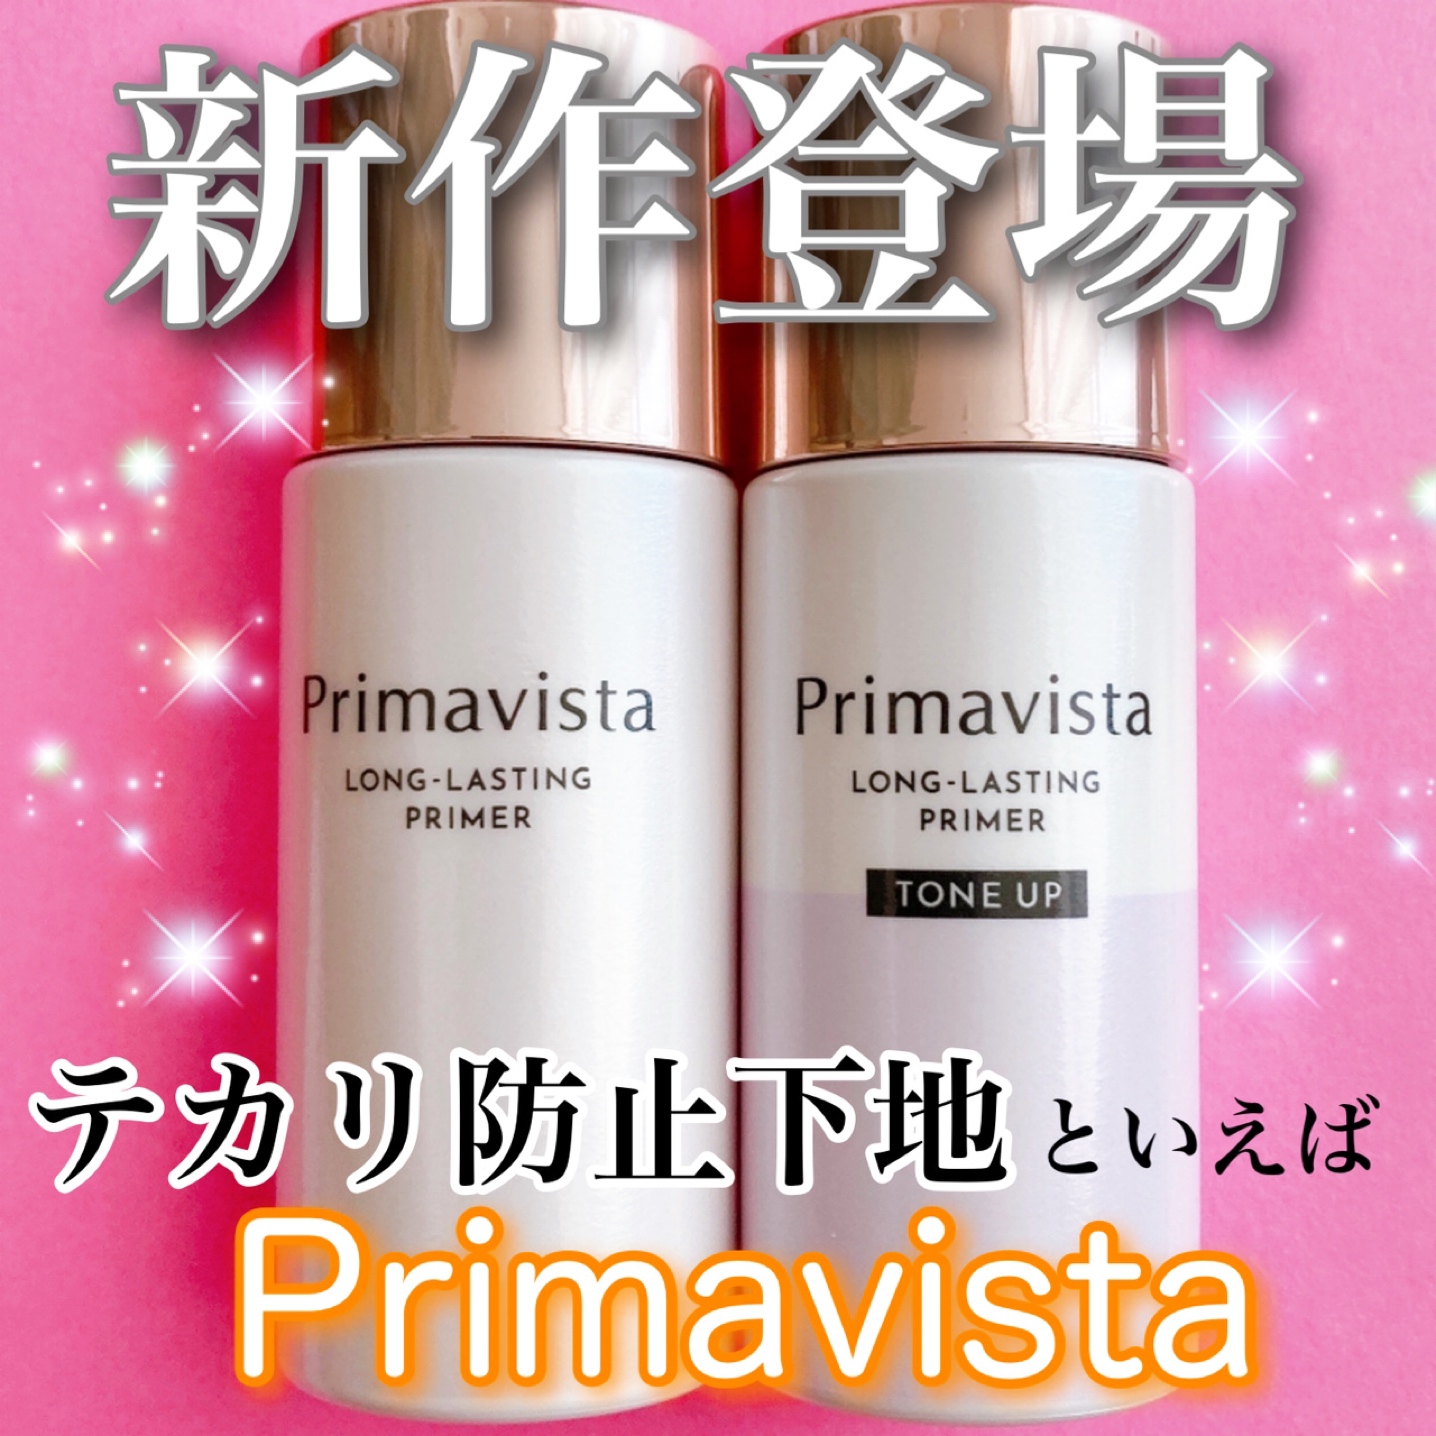 SOFINA Primavista(ソフィーナ プリマヴィスタ) 皮脂くずれ防止 化粧下地を使ったyunaさんのクチコミ画像1